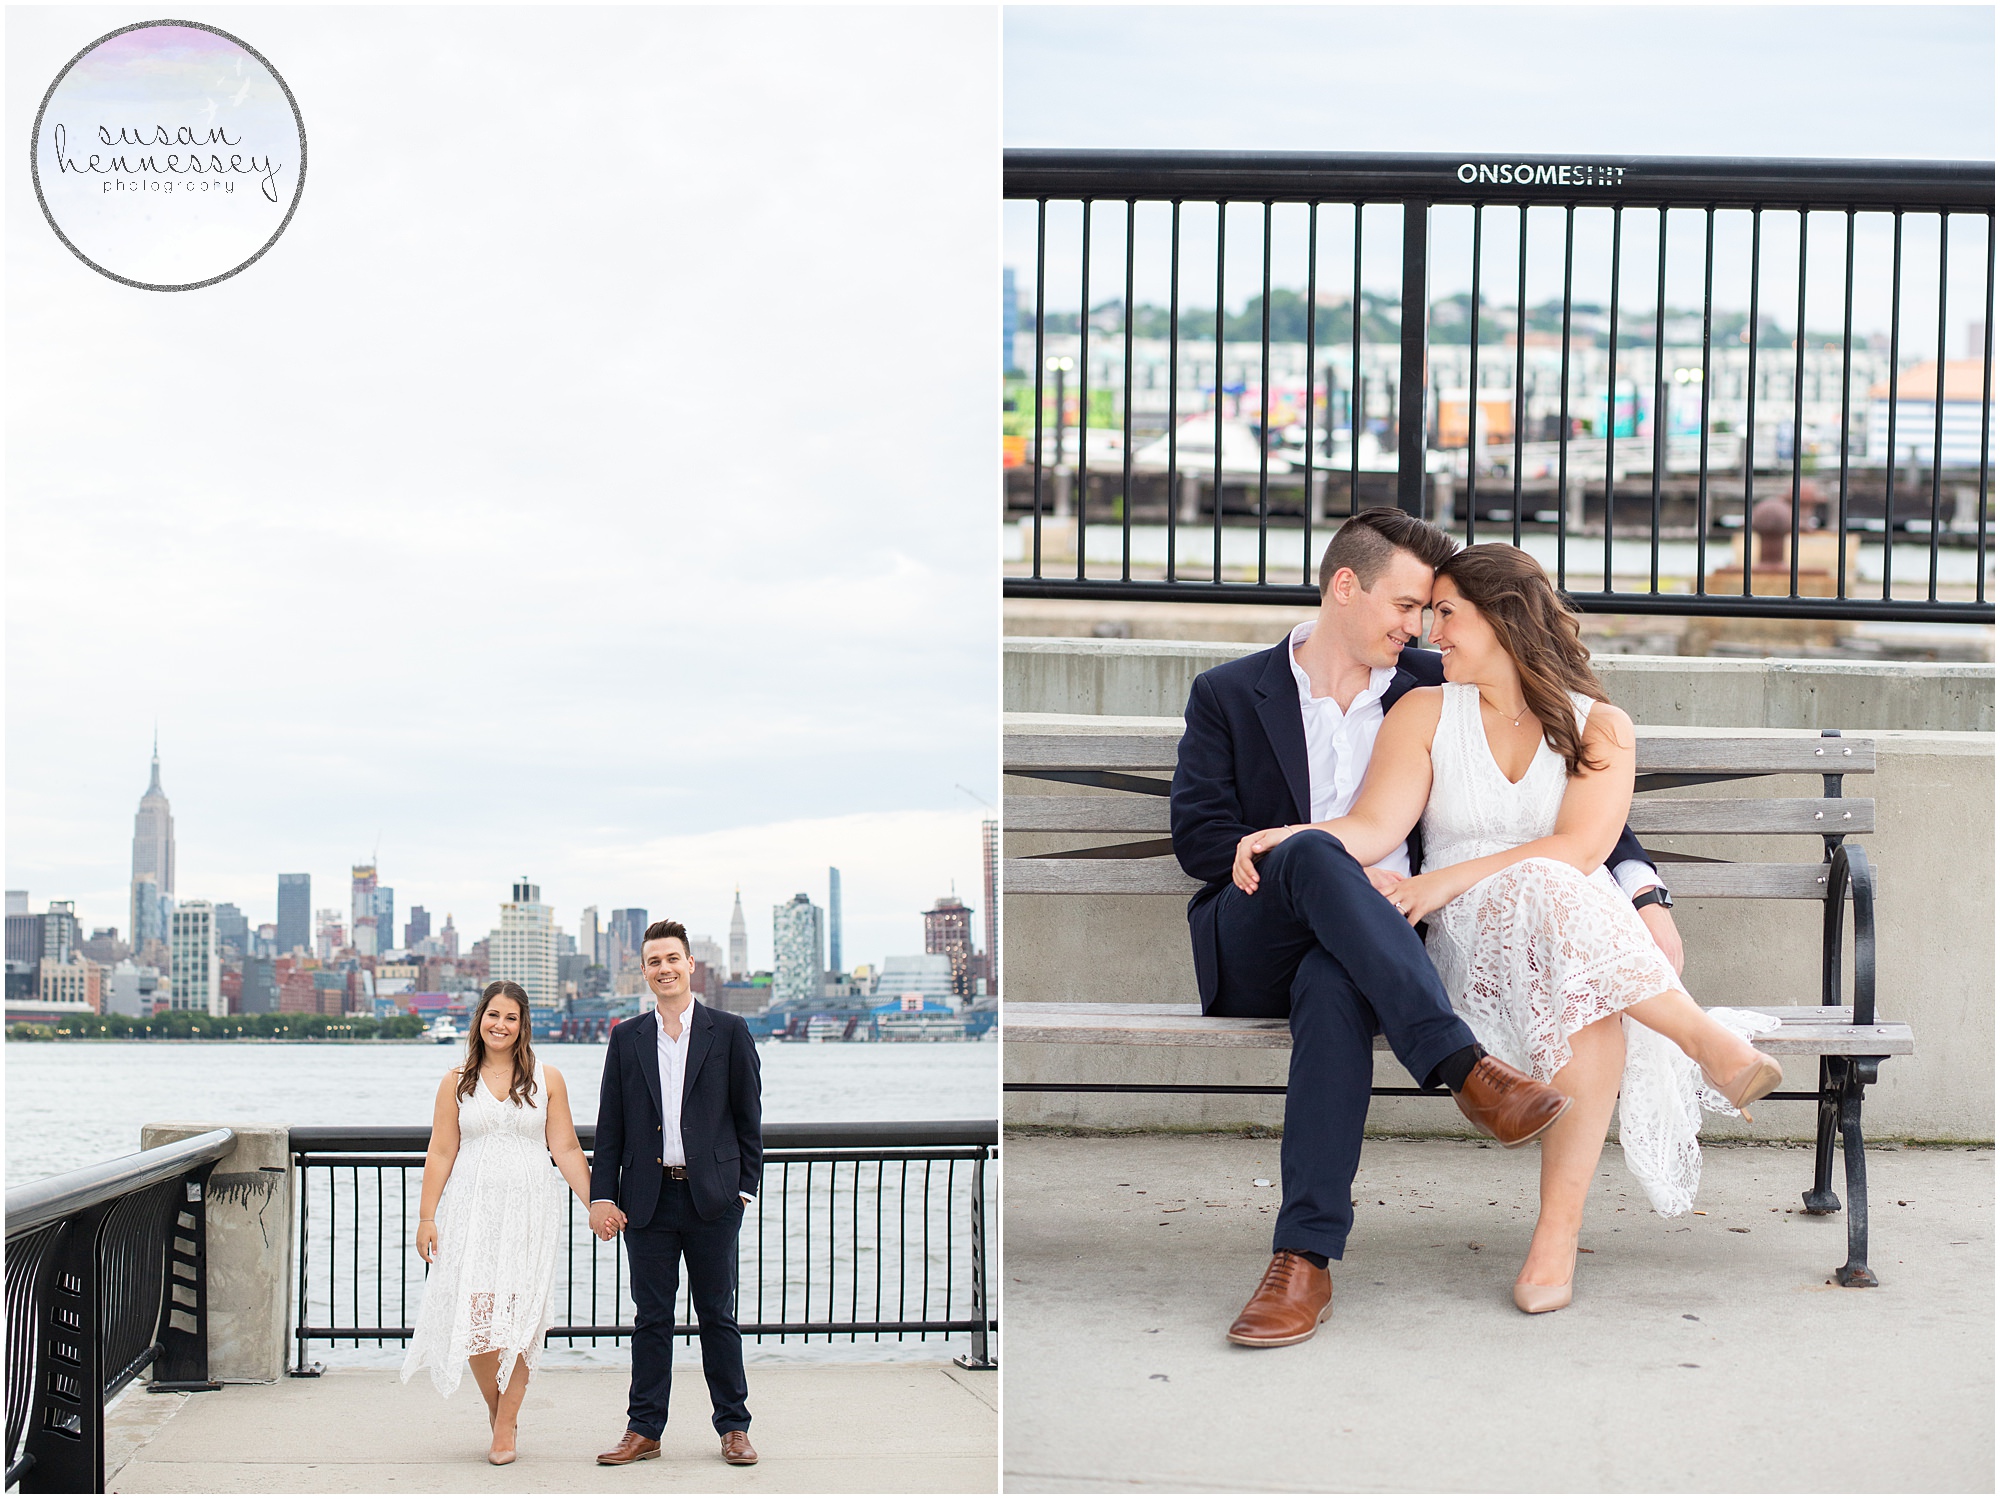 Engagement session in Hoboken